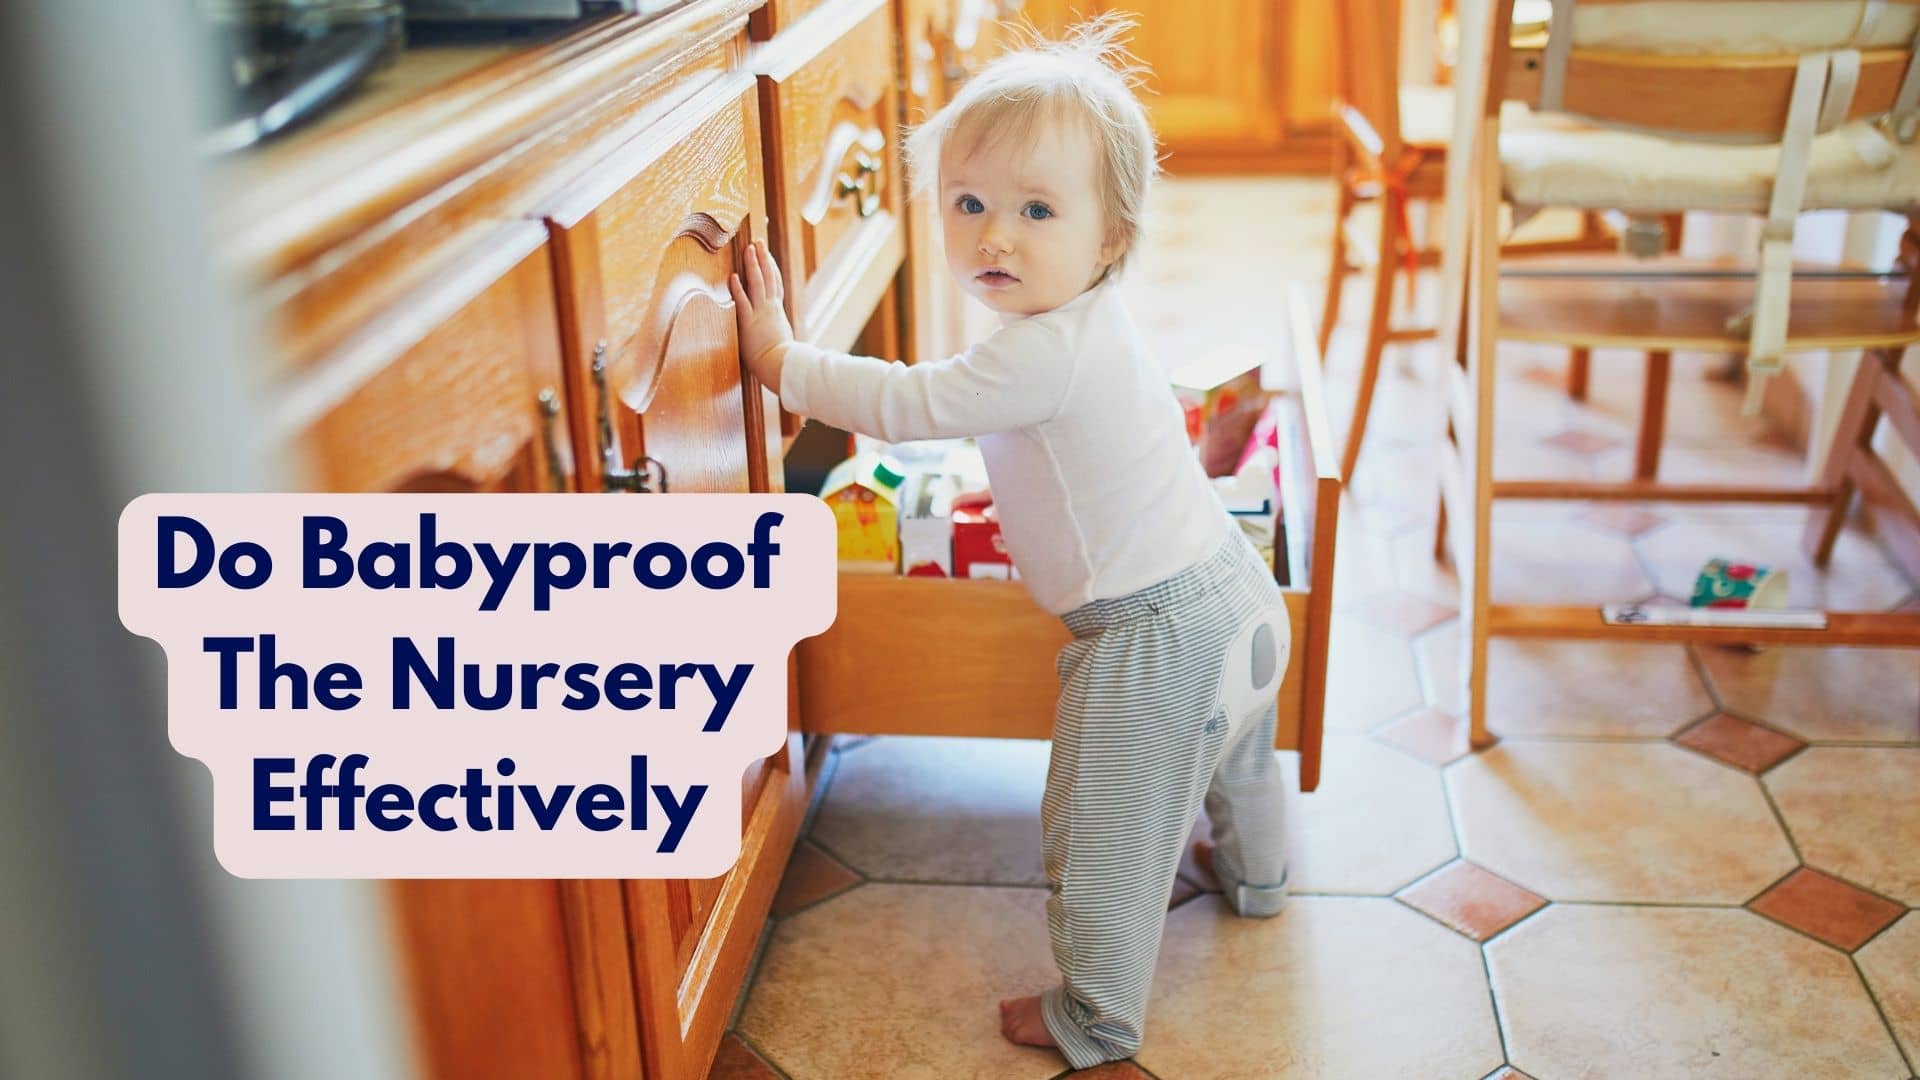 How Do I Babyproof The Nursery Effectively?